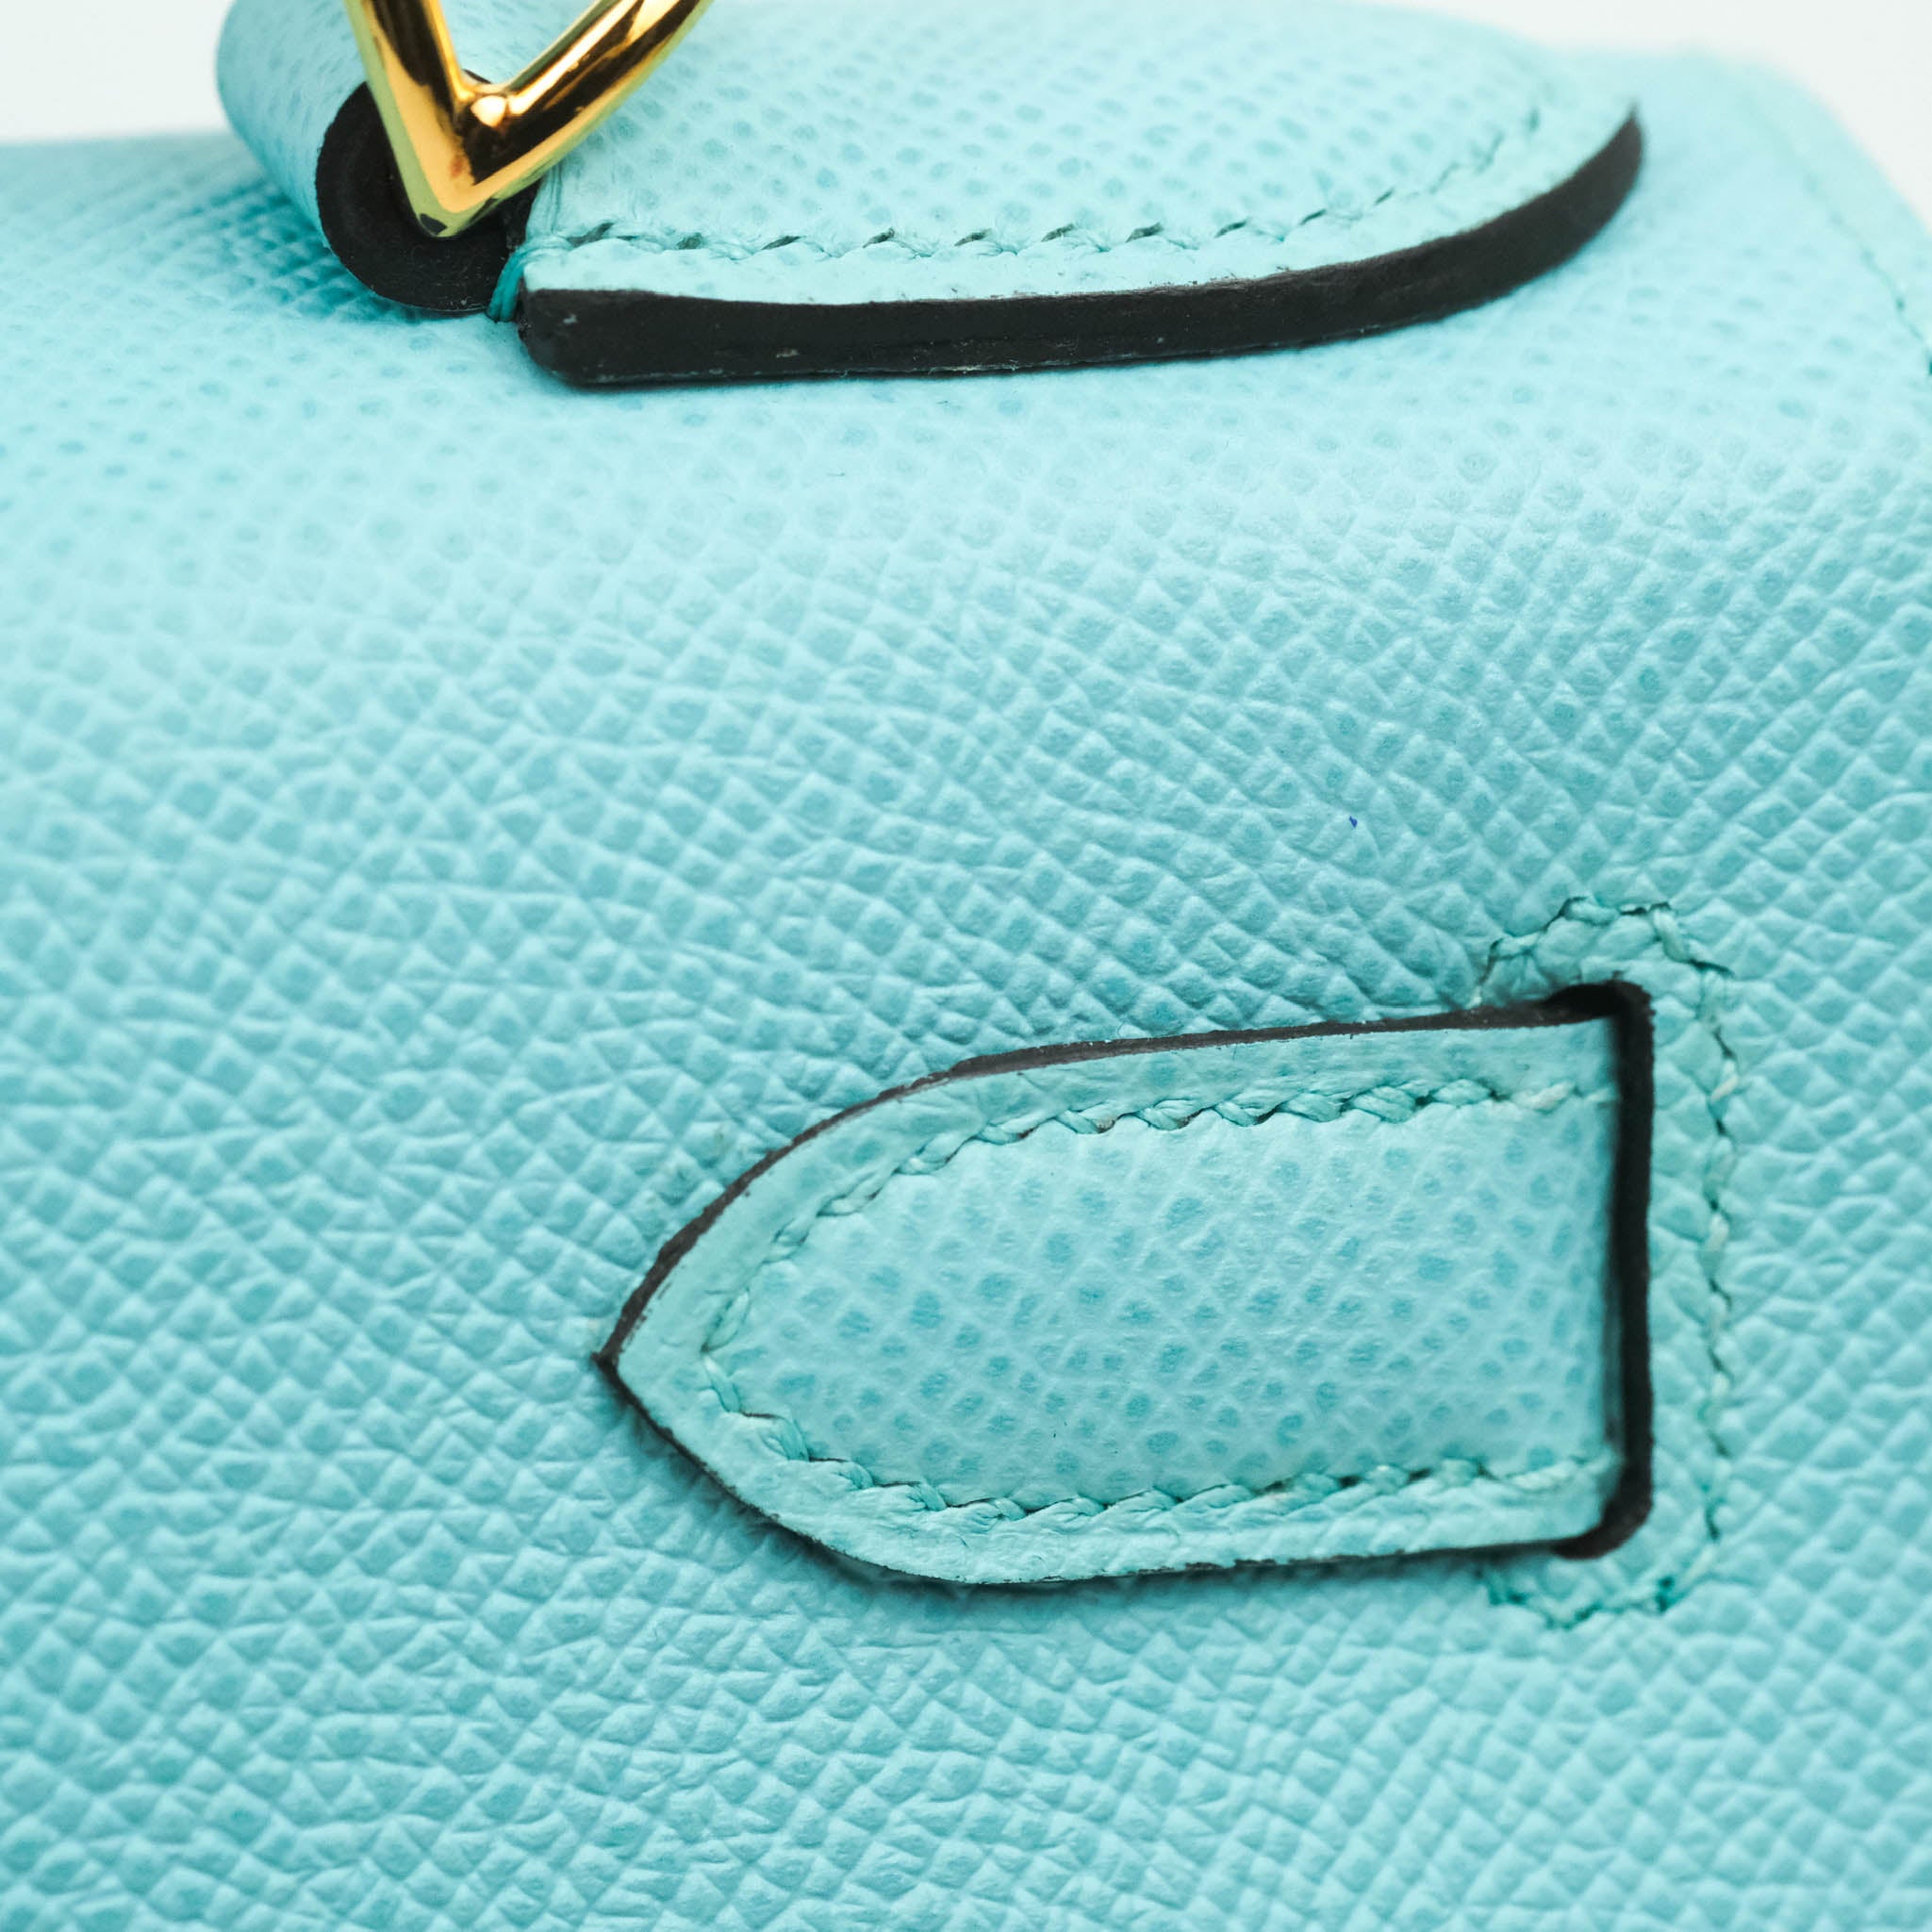 Hermès Kelly 28cm Sellier Veau Epsom M8 Gris Asphalt Gold Hardware – SukiLux